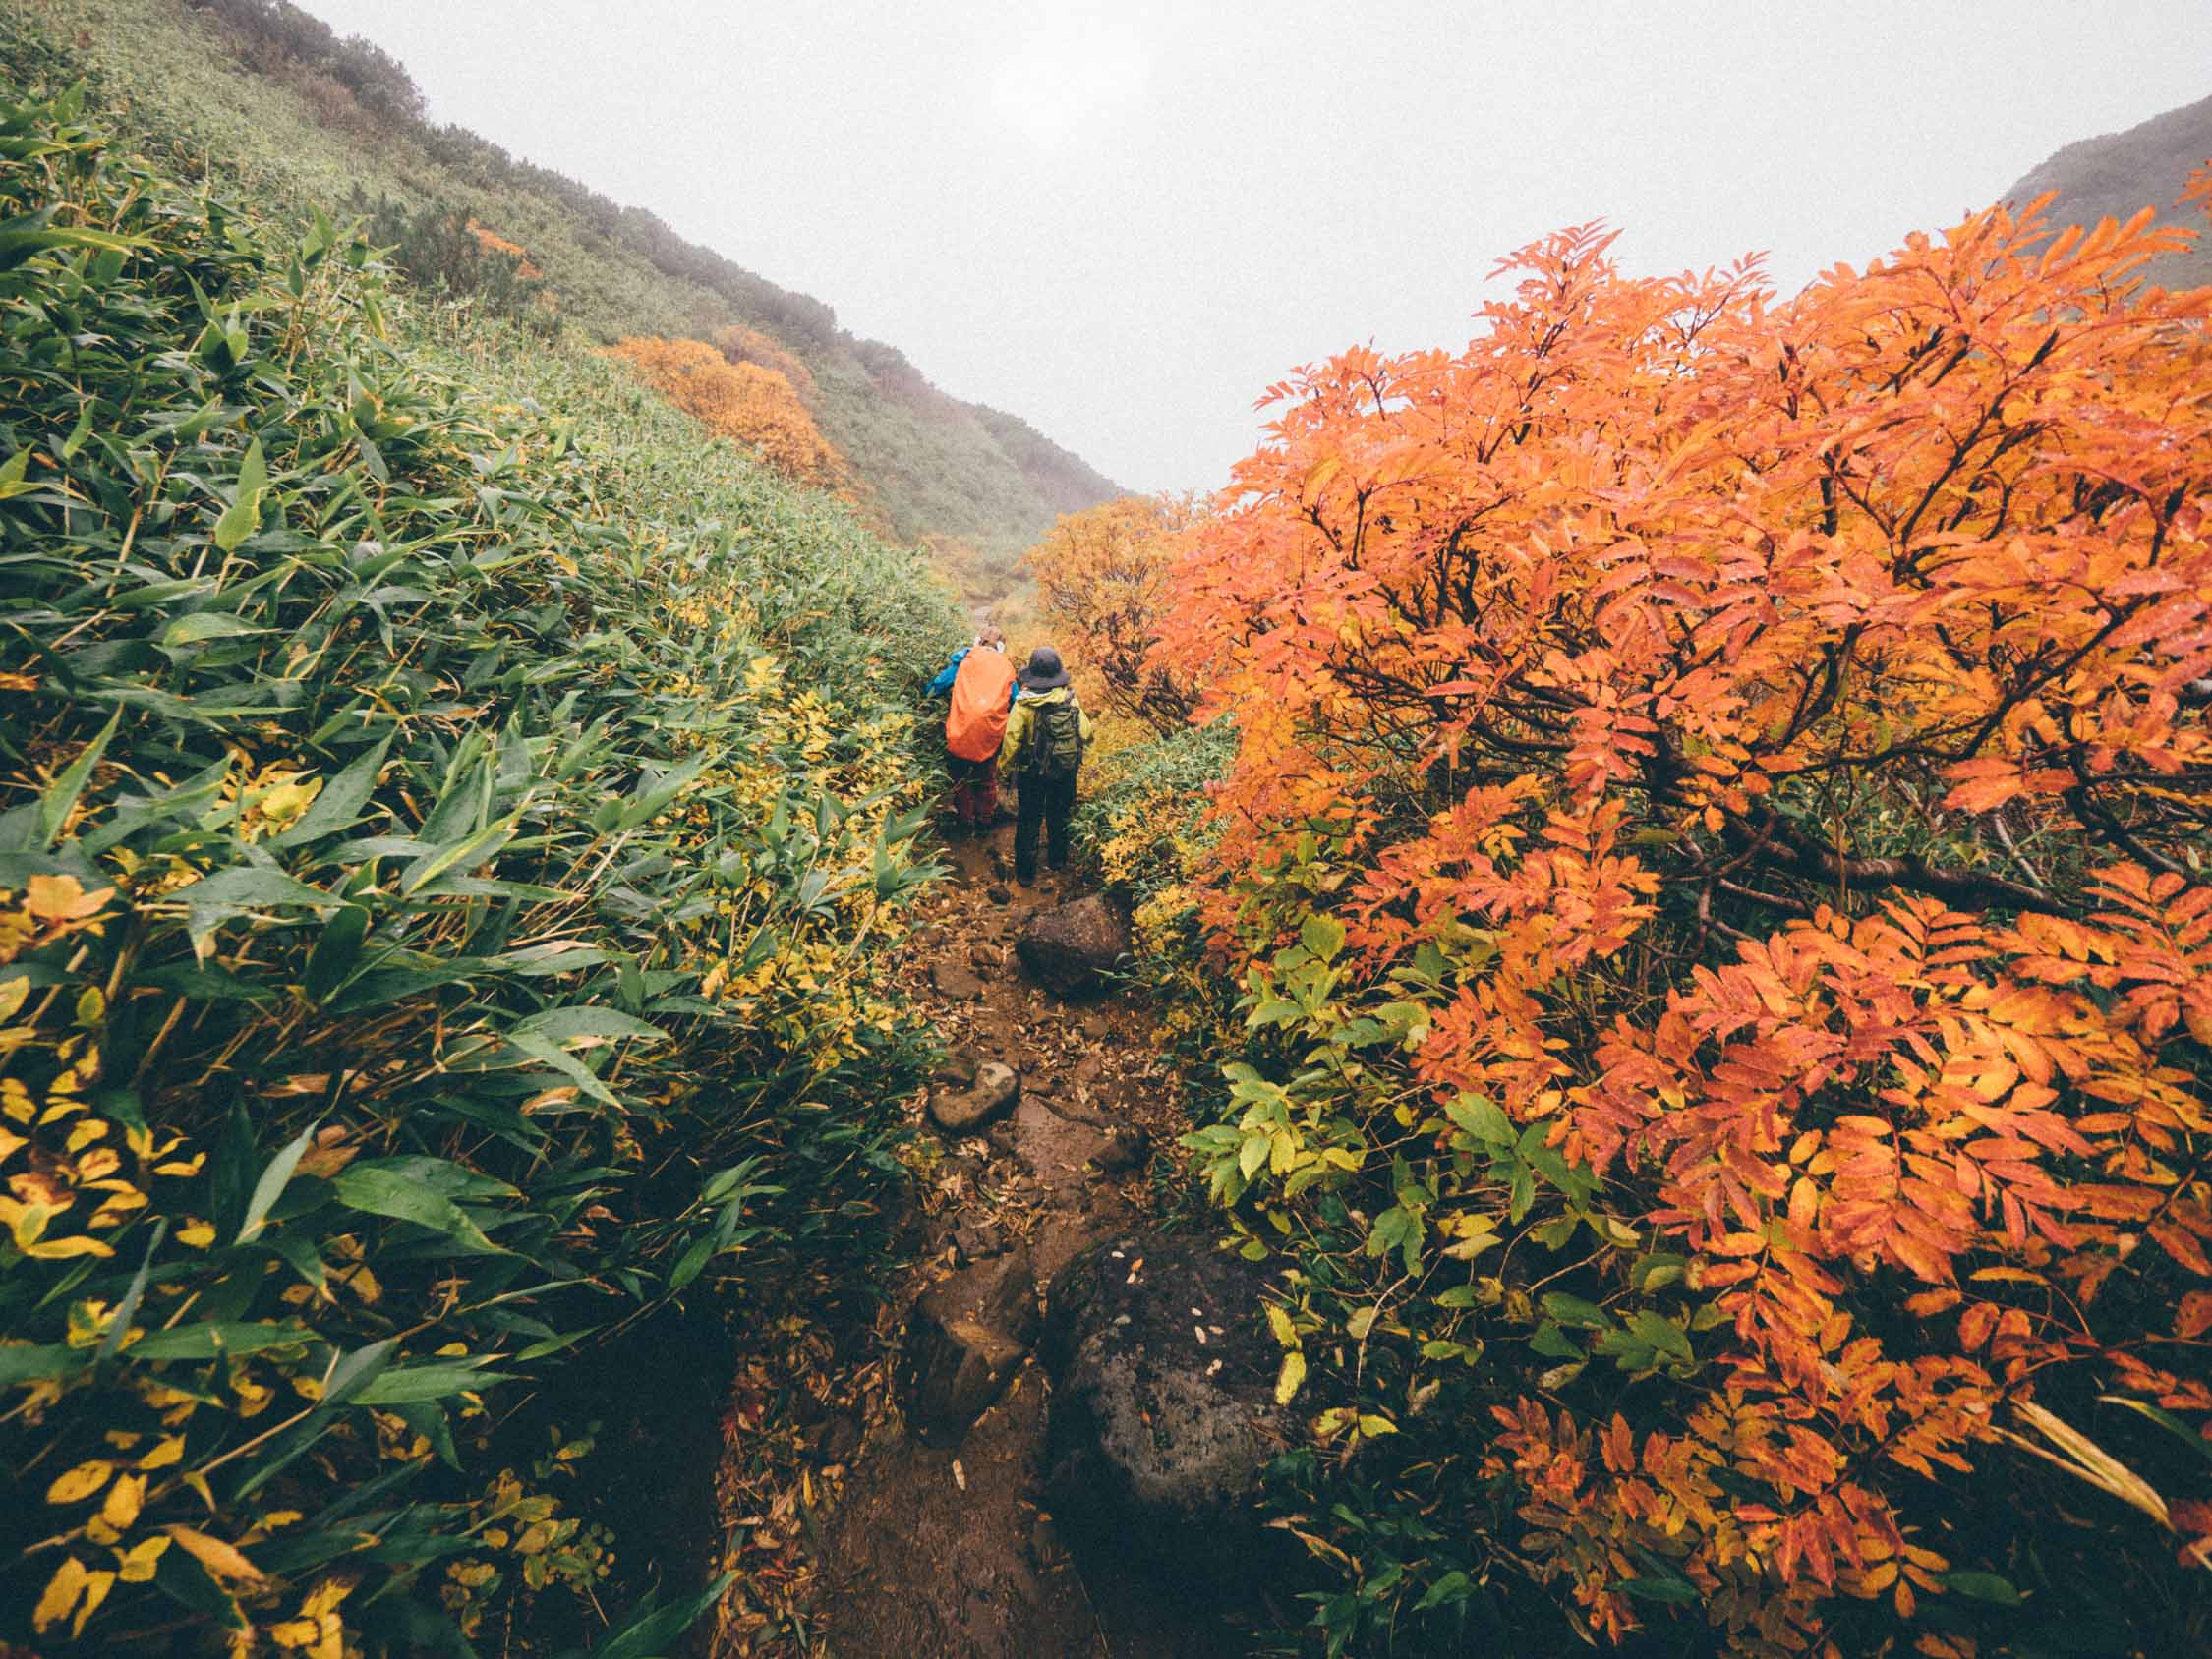 Mt-Kamihorometokku-hiking-trail-in-autumn-Hokkaido-Japan_31012411108_o